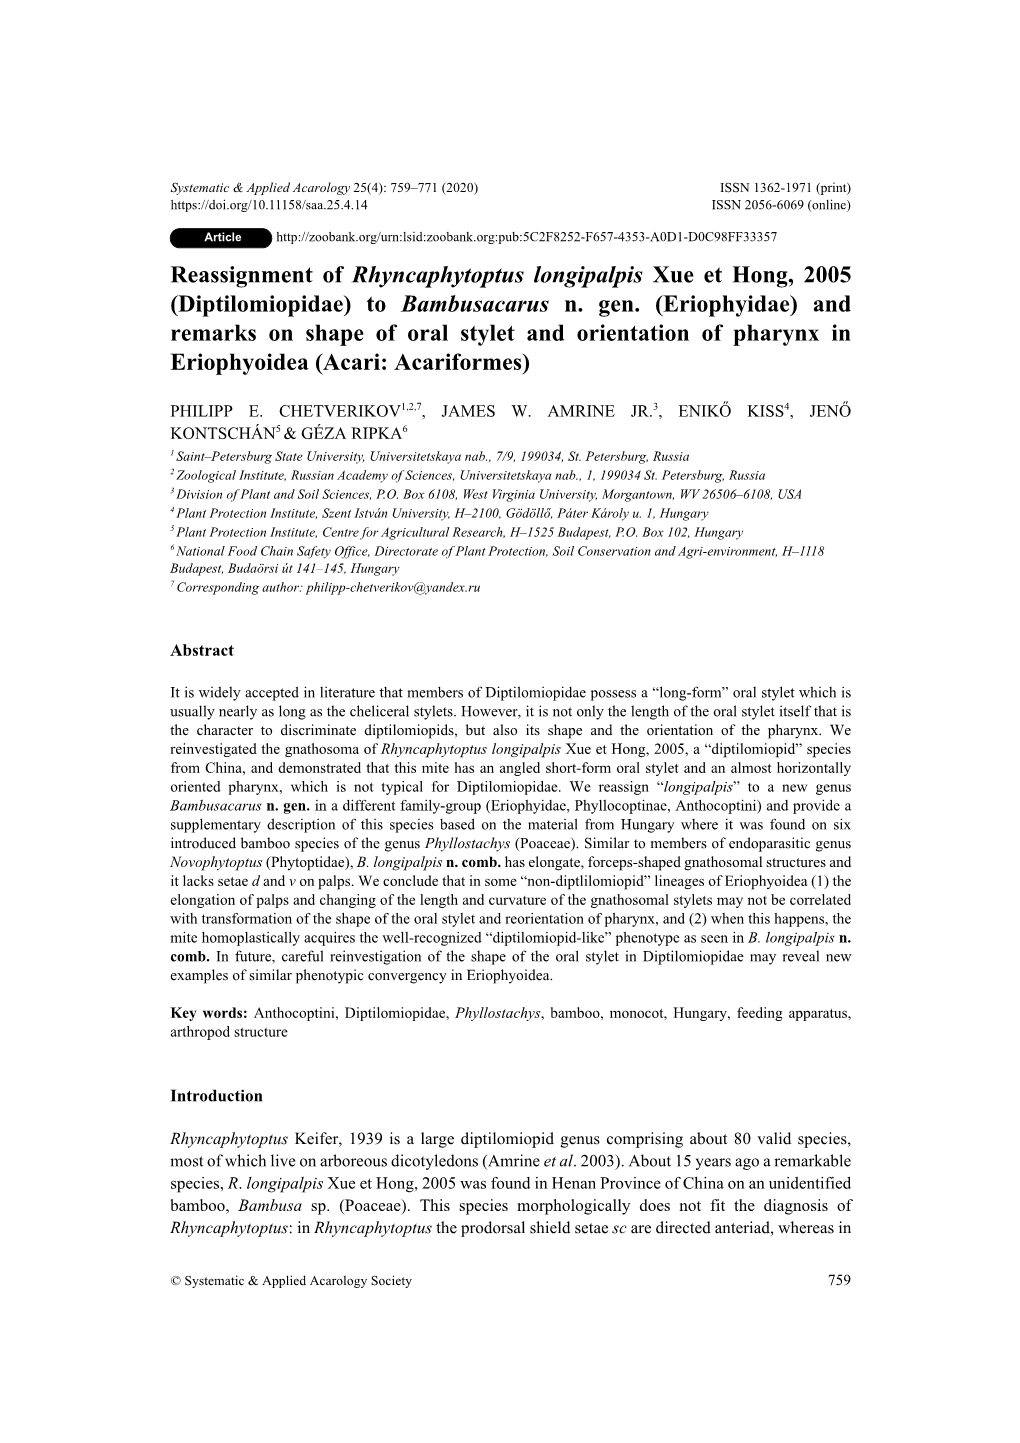 Reassignment of Rhyncaphytoptus Longipalpis Xue Et Hong, 2005 (Diptilomiopidae) to Bambusacarus N